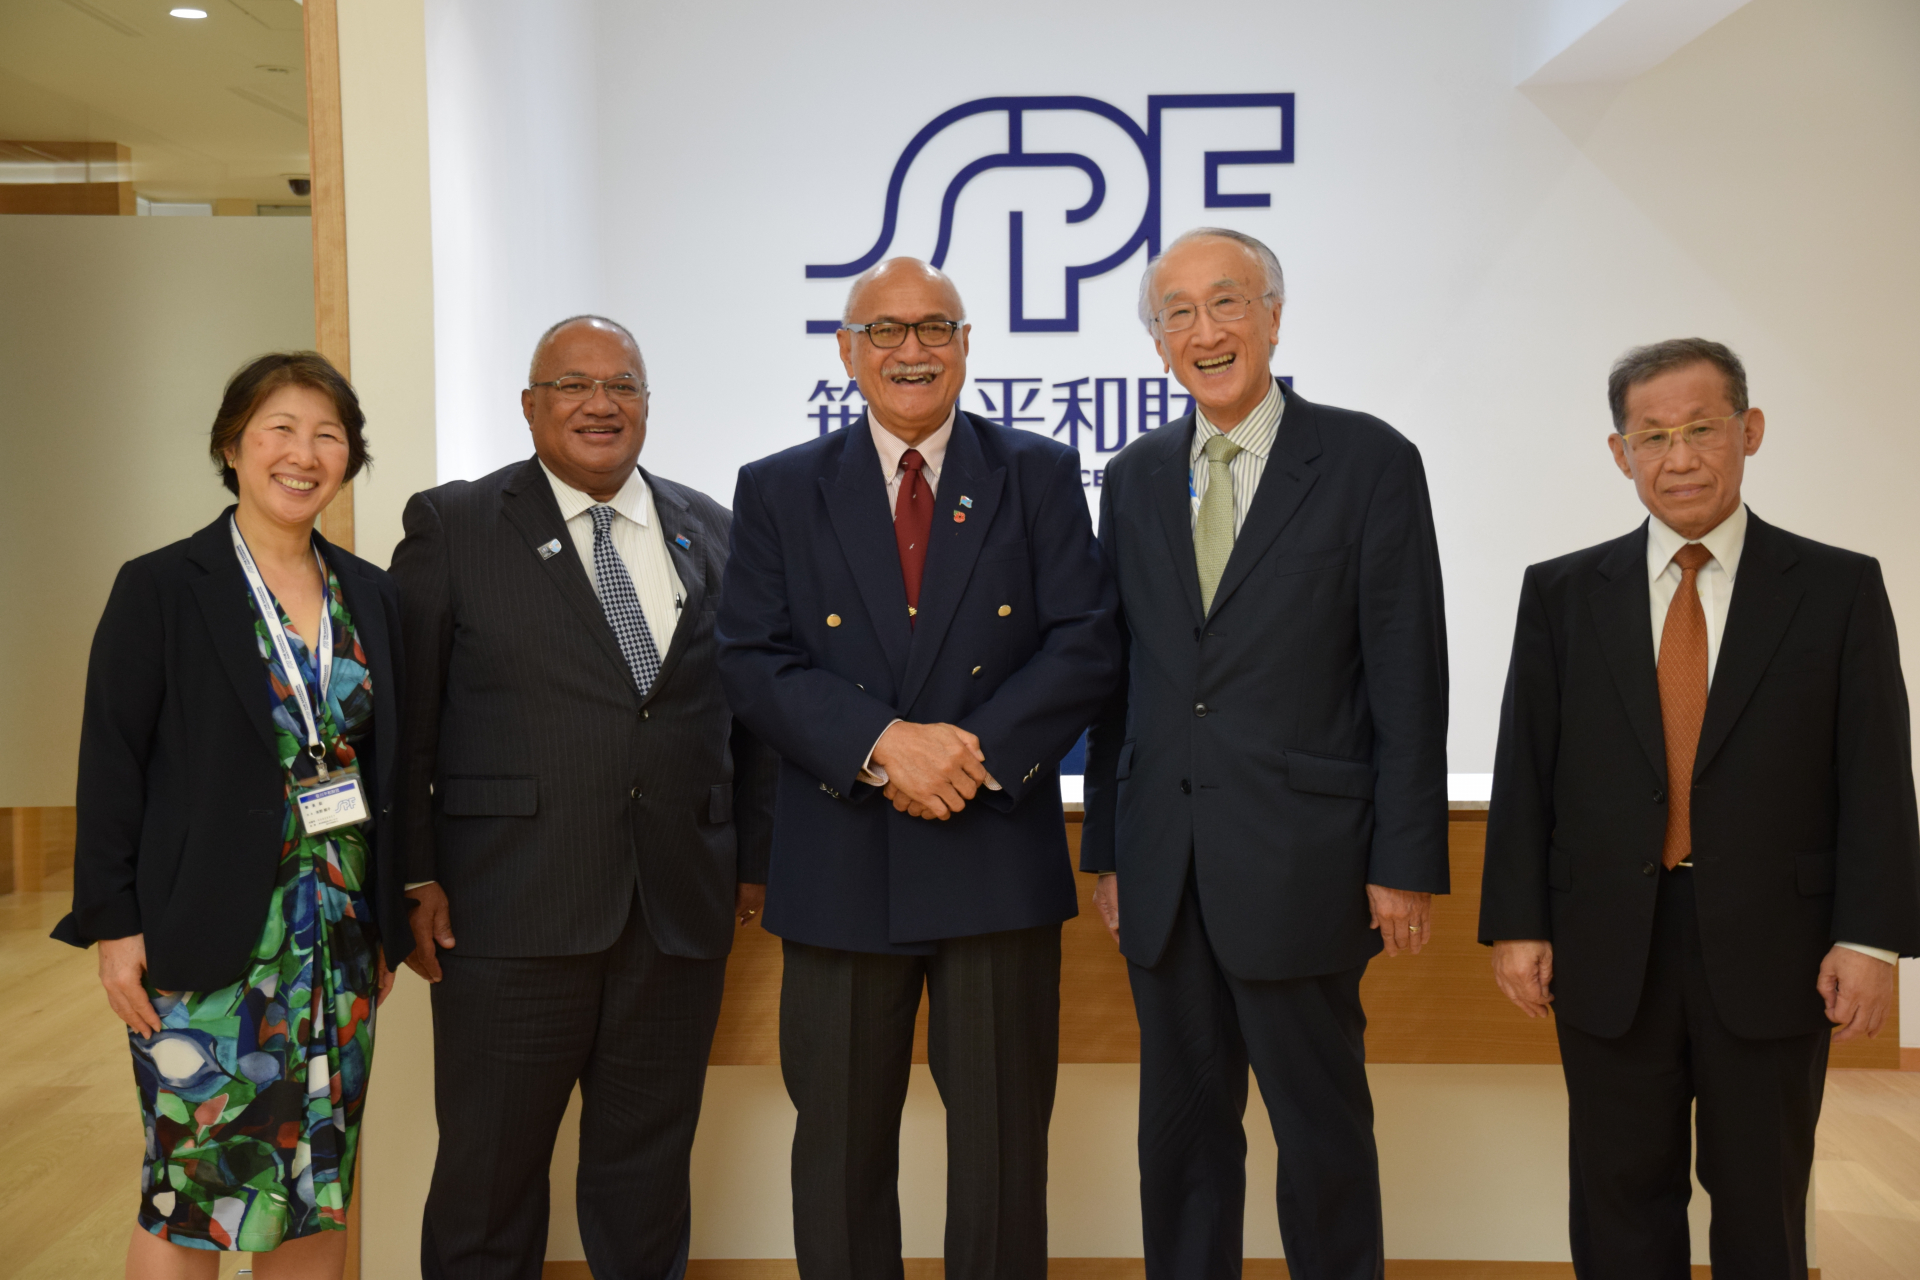 (From left) SPF Executive Director Junko Chano, Fiji’s Ambassador to Japan H.E. Isikeli Mataitoga, President of Fiji H.E. Jioji Konrote, SPF Chairman Nobuo Tanaka, and SPF President Shuichi Ohno